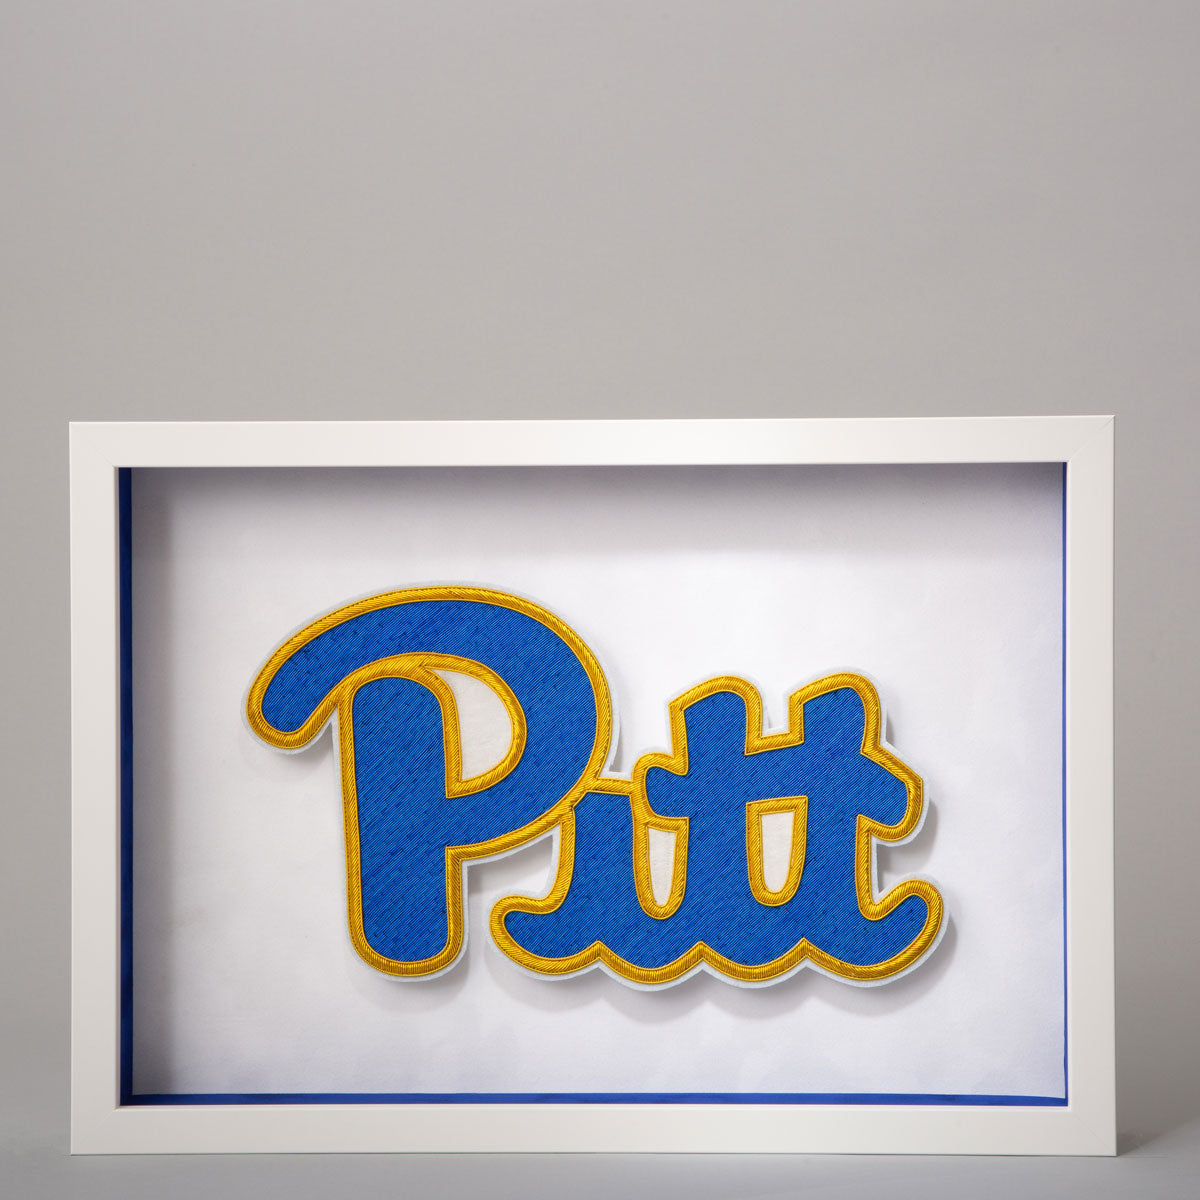 Pitt Name